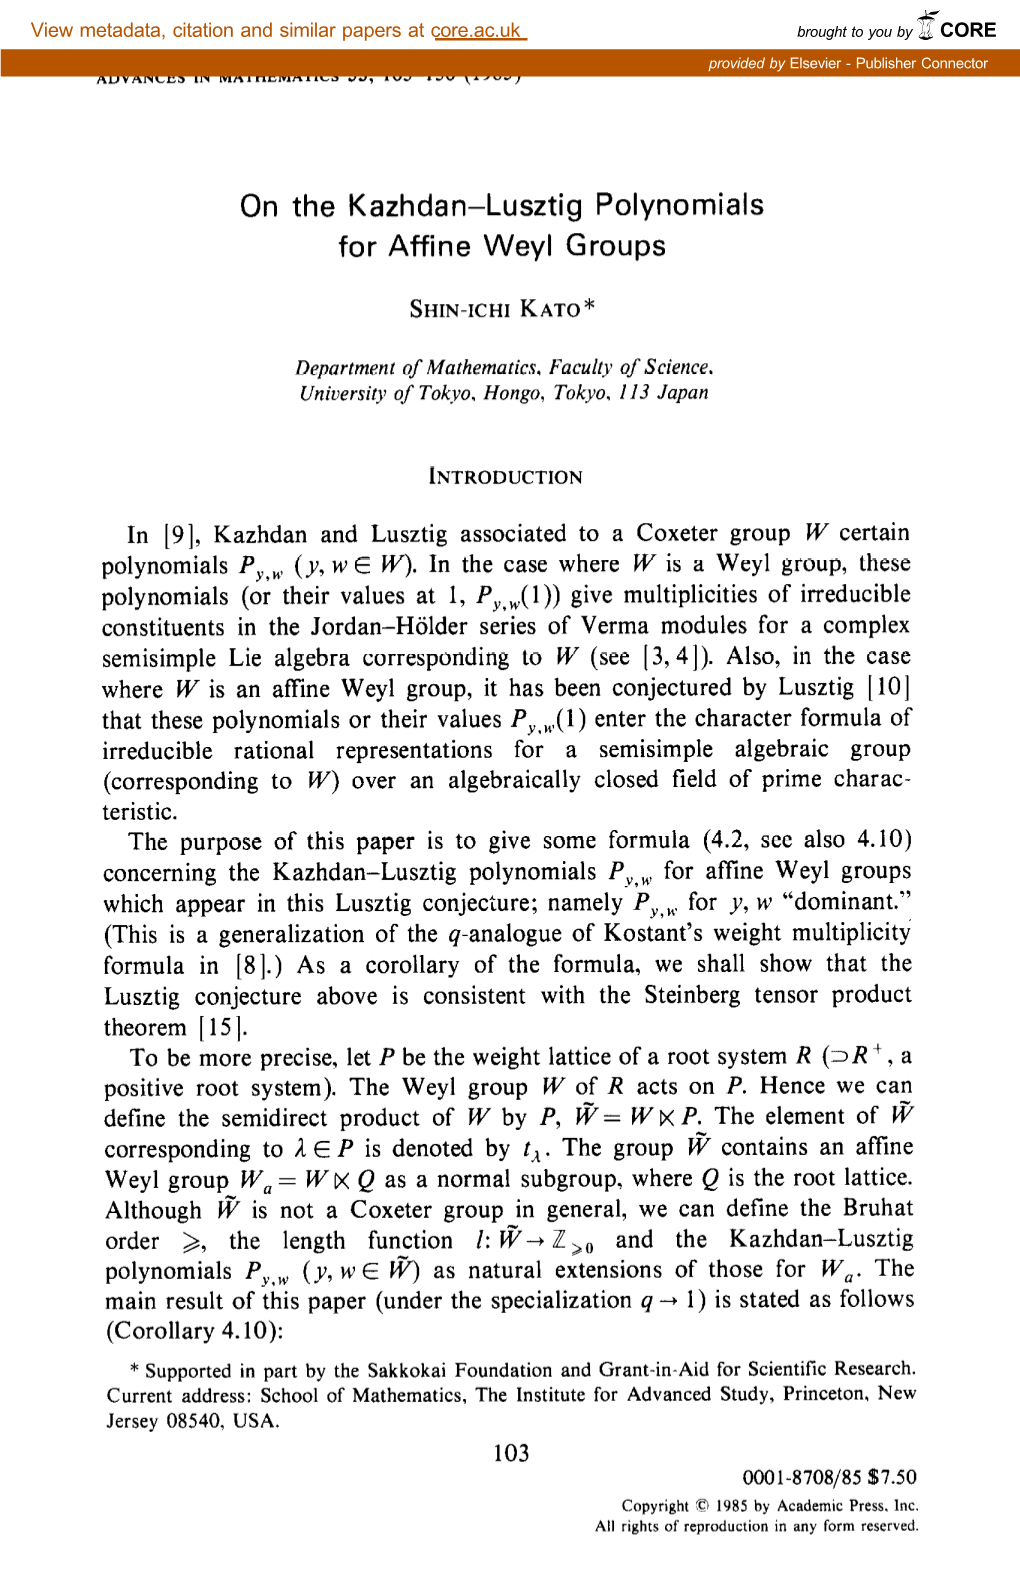 On the Kazhdan-Lusztig Polynomials for Affine Weyl Groups